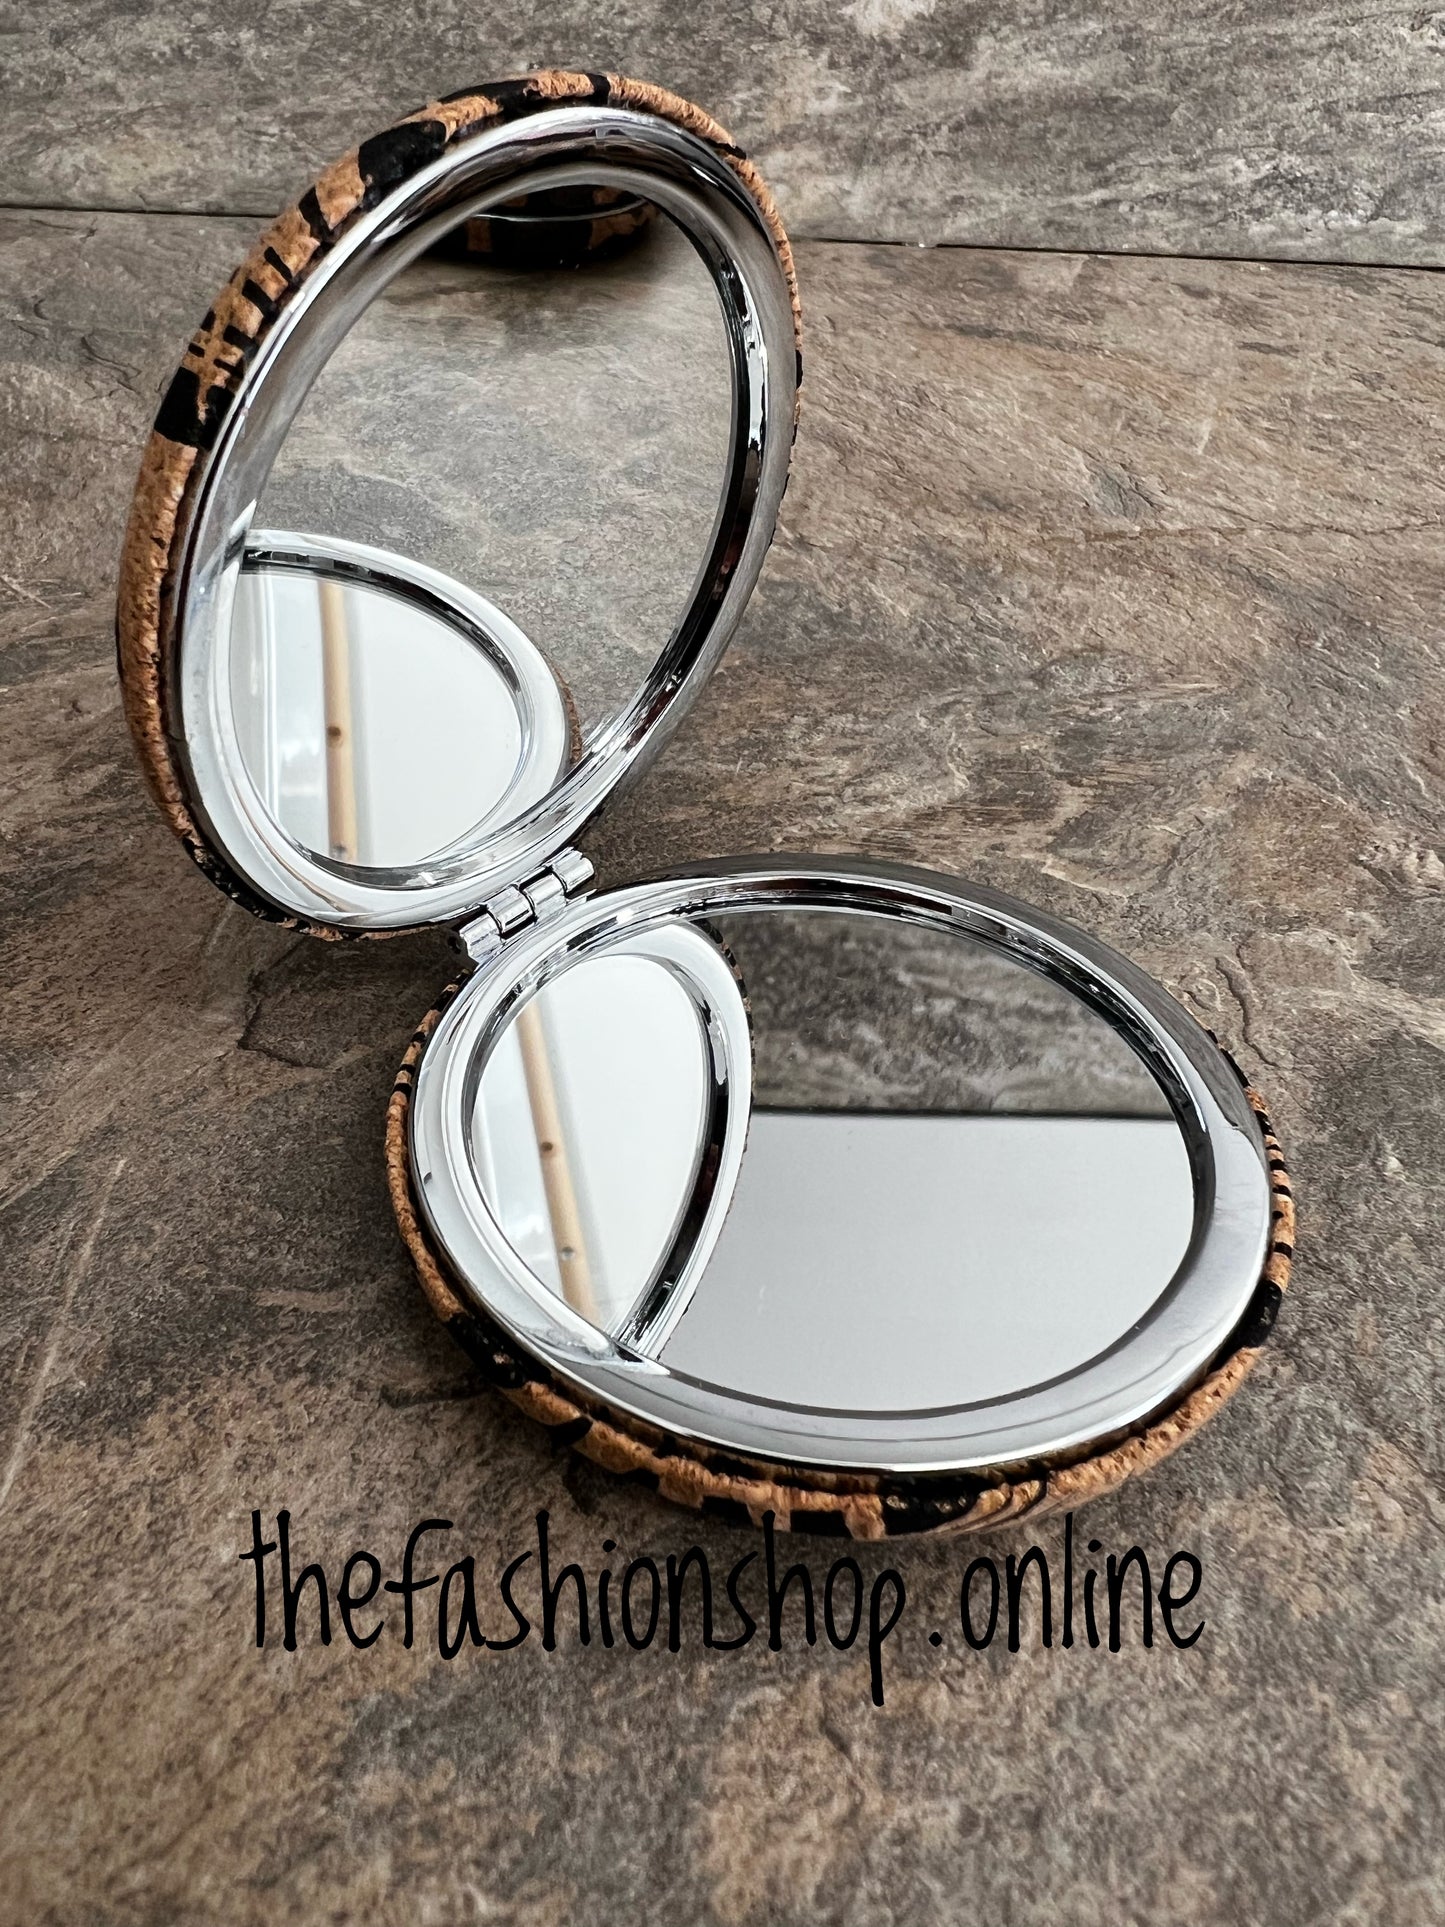 Palm leaf compact mirror